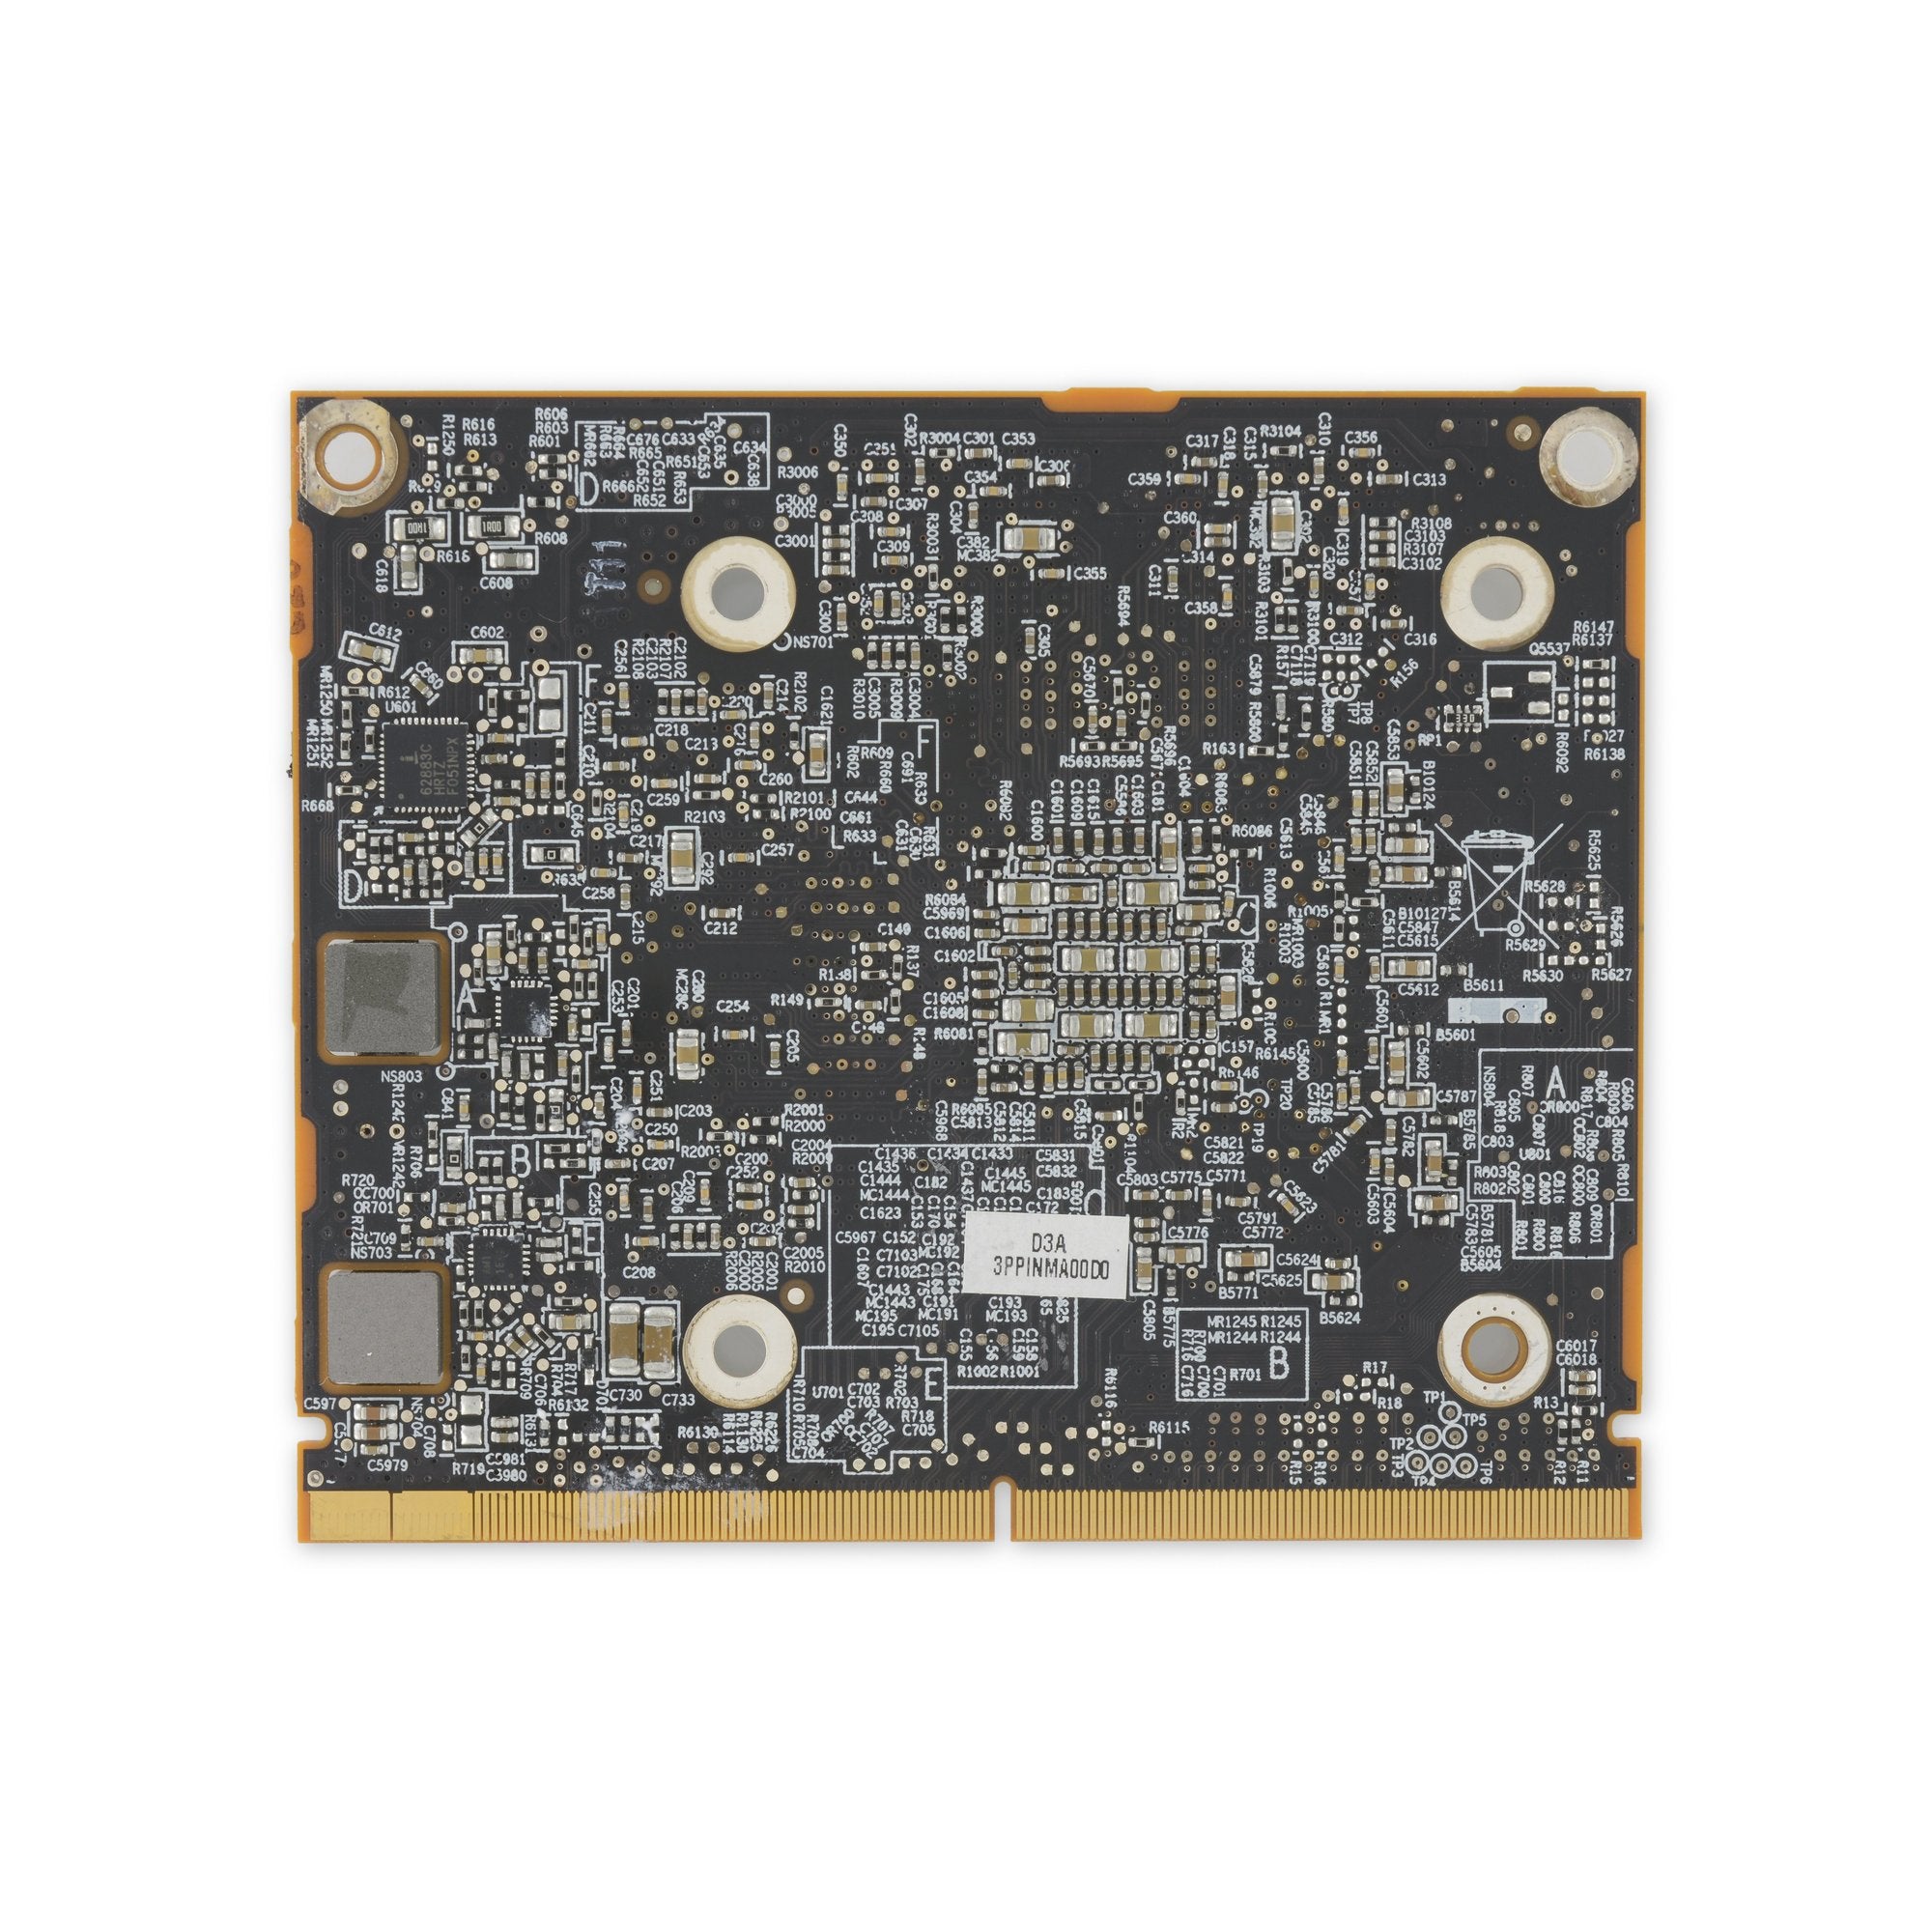 iMac Intel 27" EMC 2429 Radeon HD 6770M Graphics Card Used